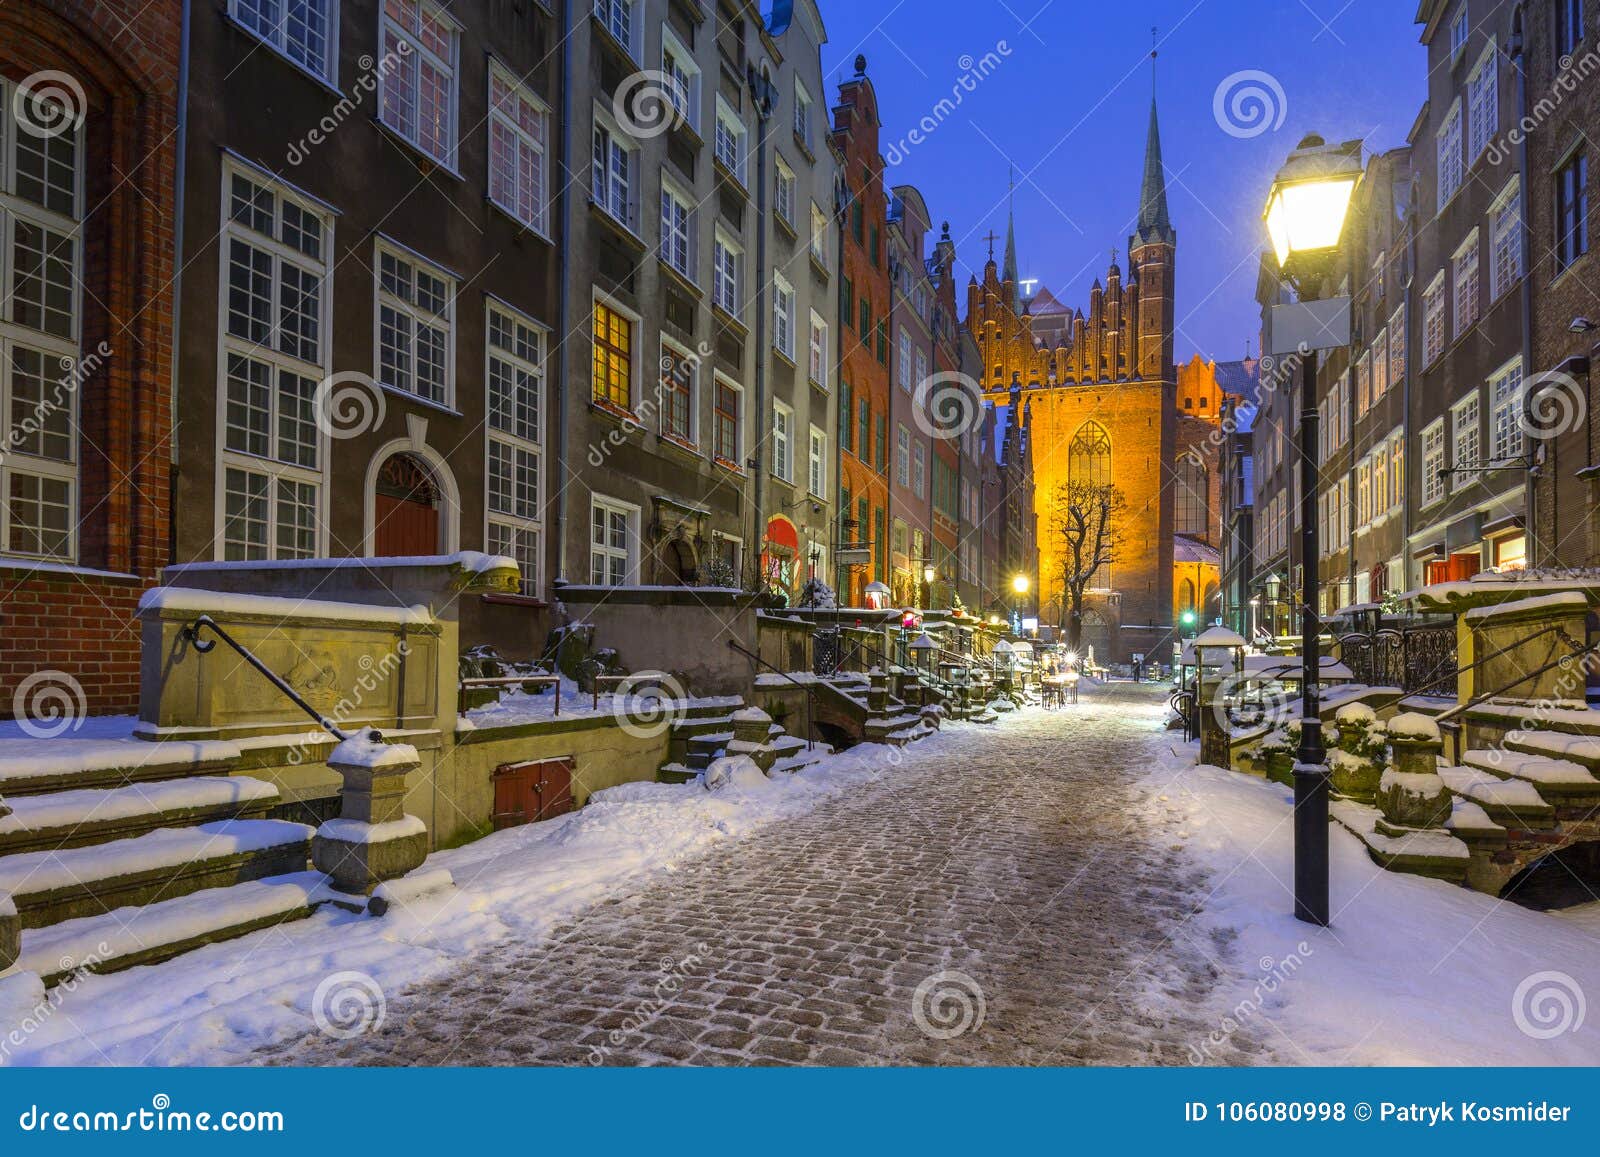 beautiful mariacka street in gdansk at snowy winter